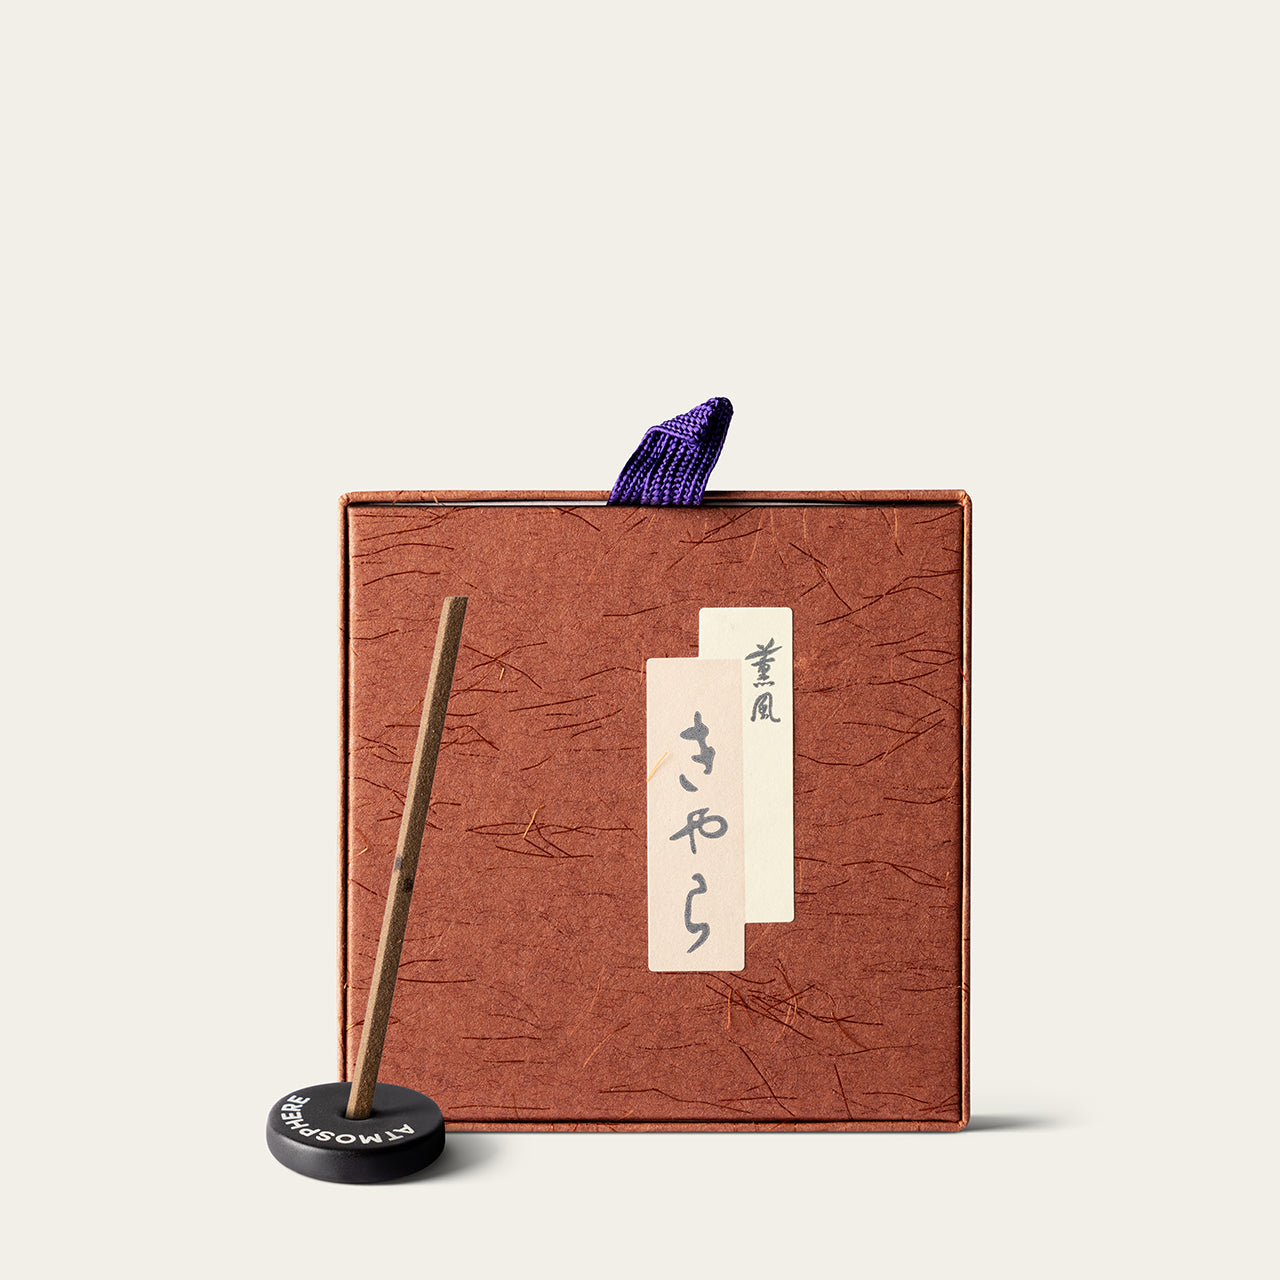 Minorien Kunpu Kunpu Kyara Japanese incense sticks (40 sticks) with Atmosphere ceramic incense holder